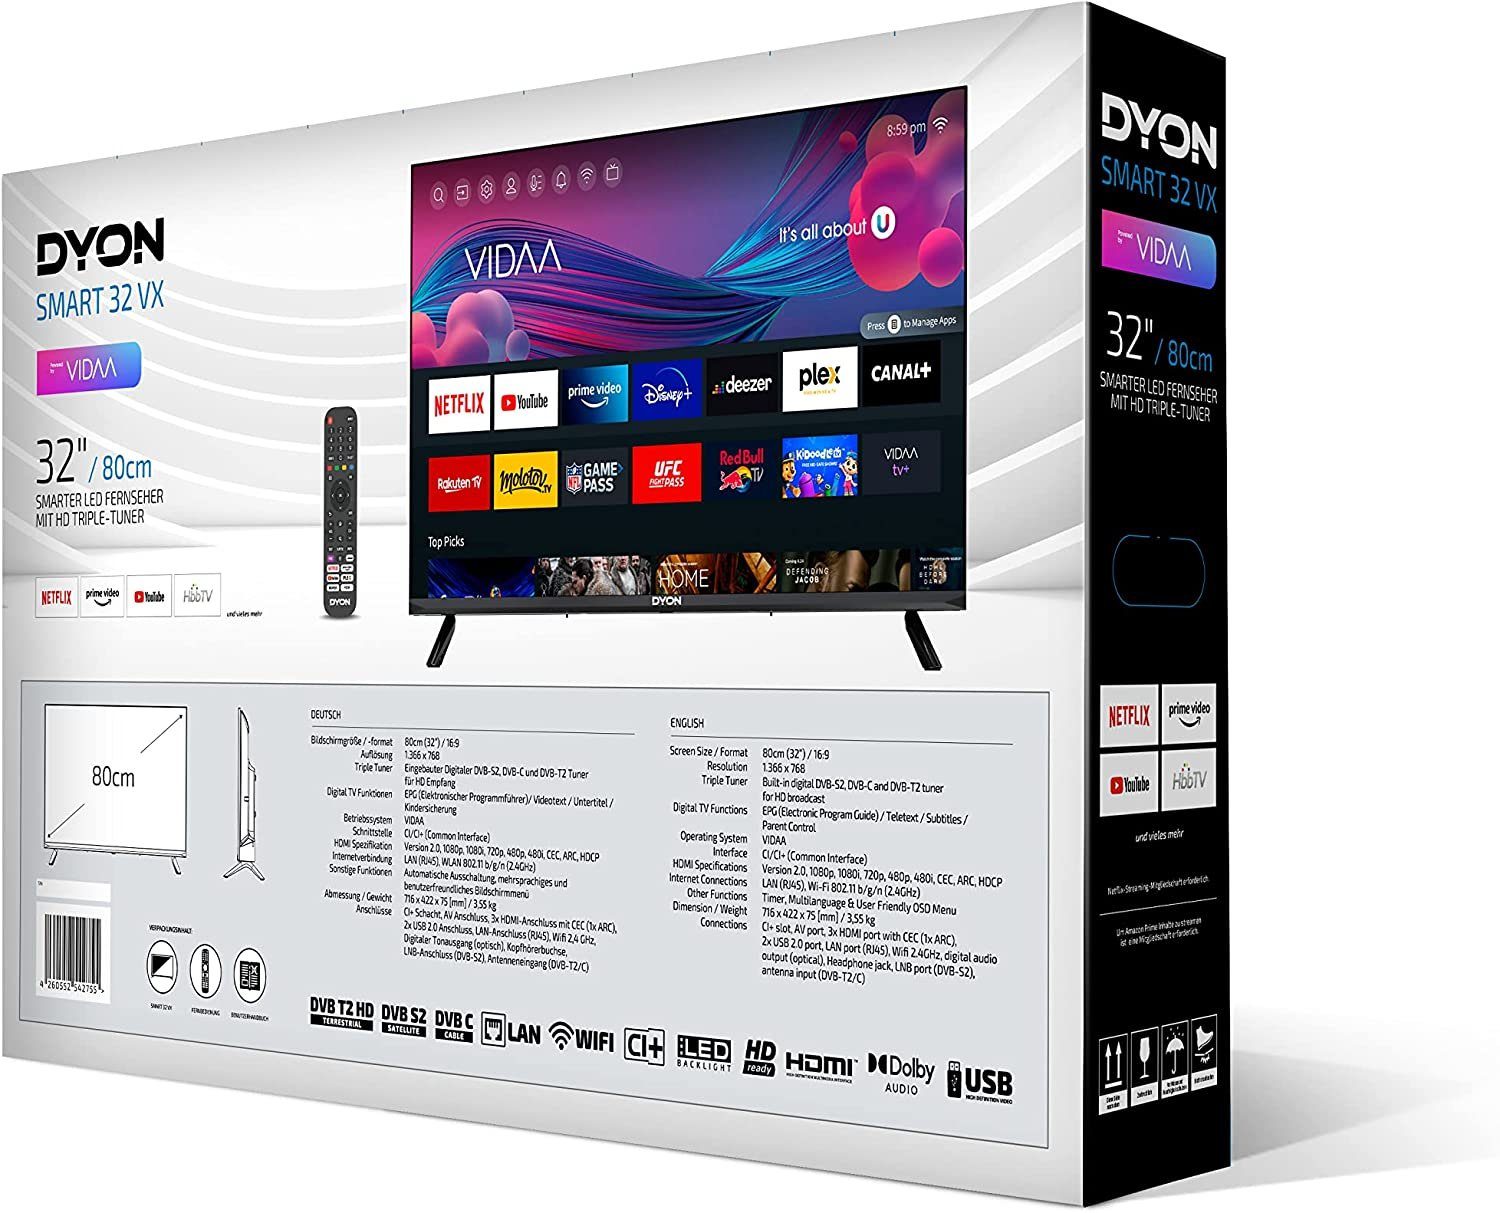 VX cm/32 Zoll, (80 32 LED-Fernseher Dyon Smart Smart-TV) HD-Ready,